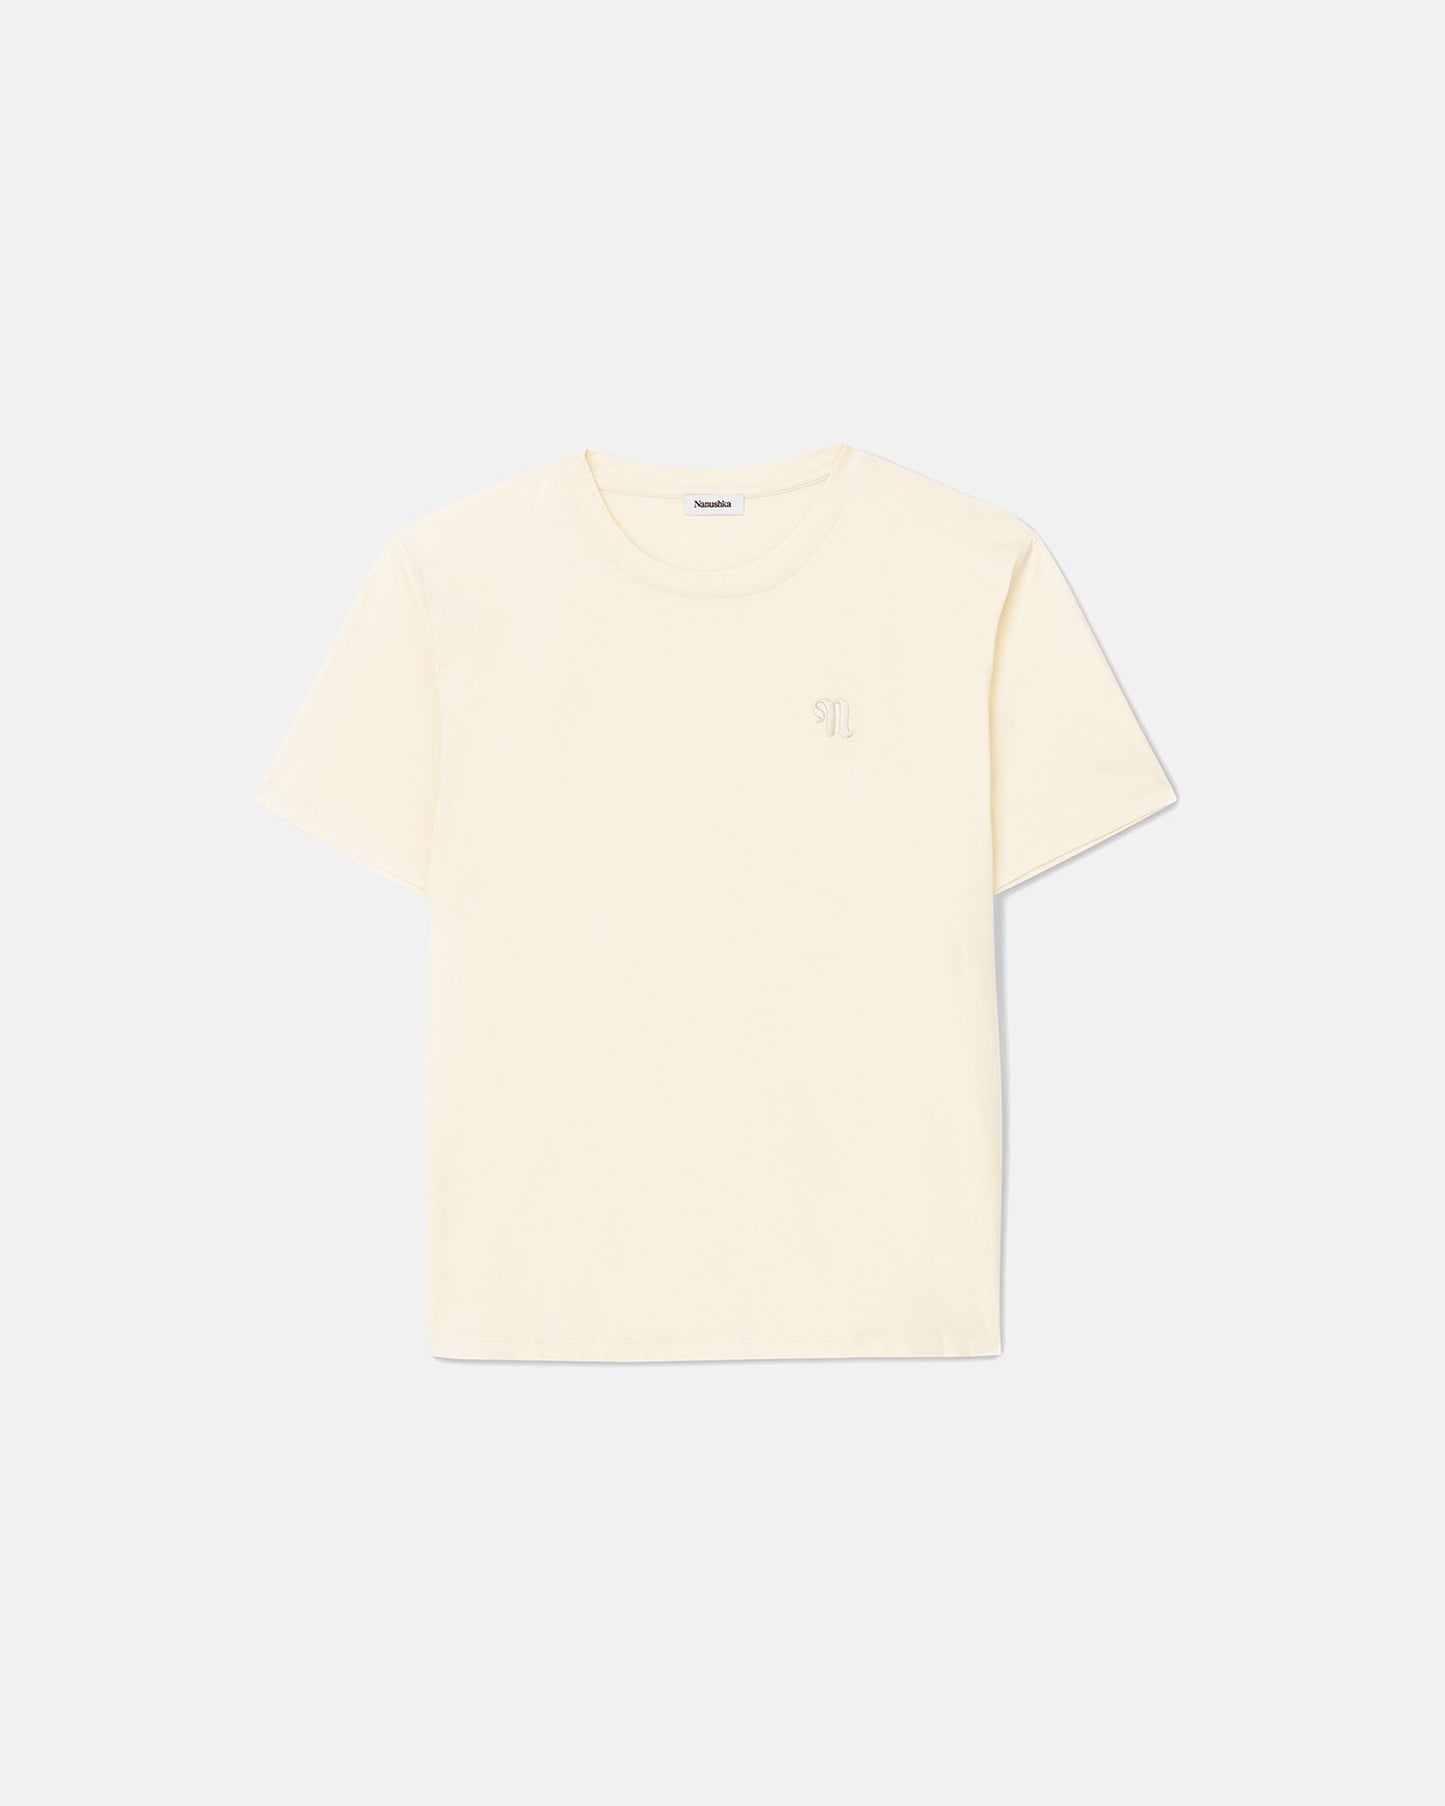 Reece - Organically Grown Cotton T-Shirt - Creme